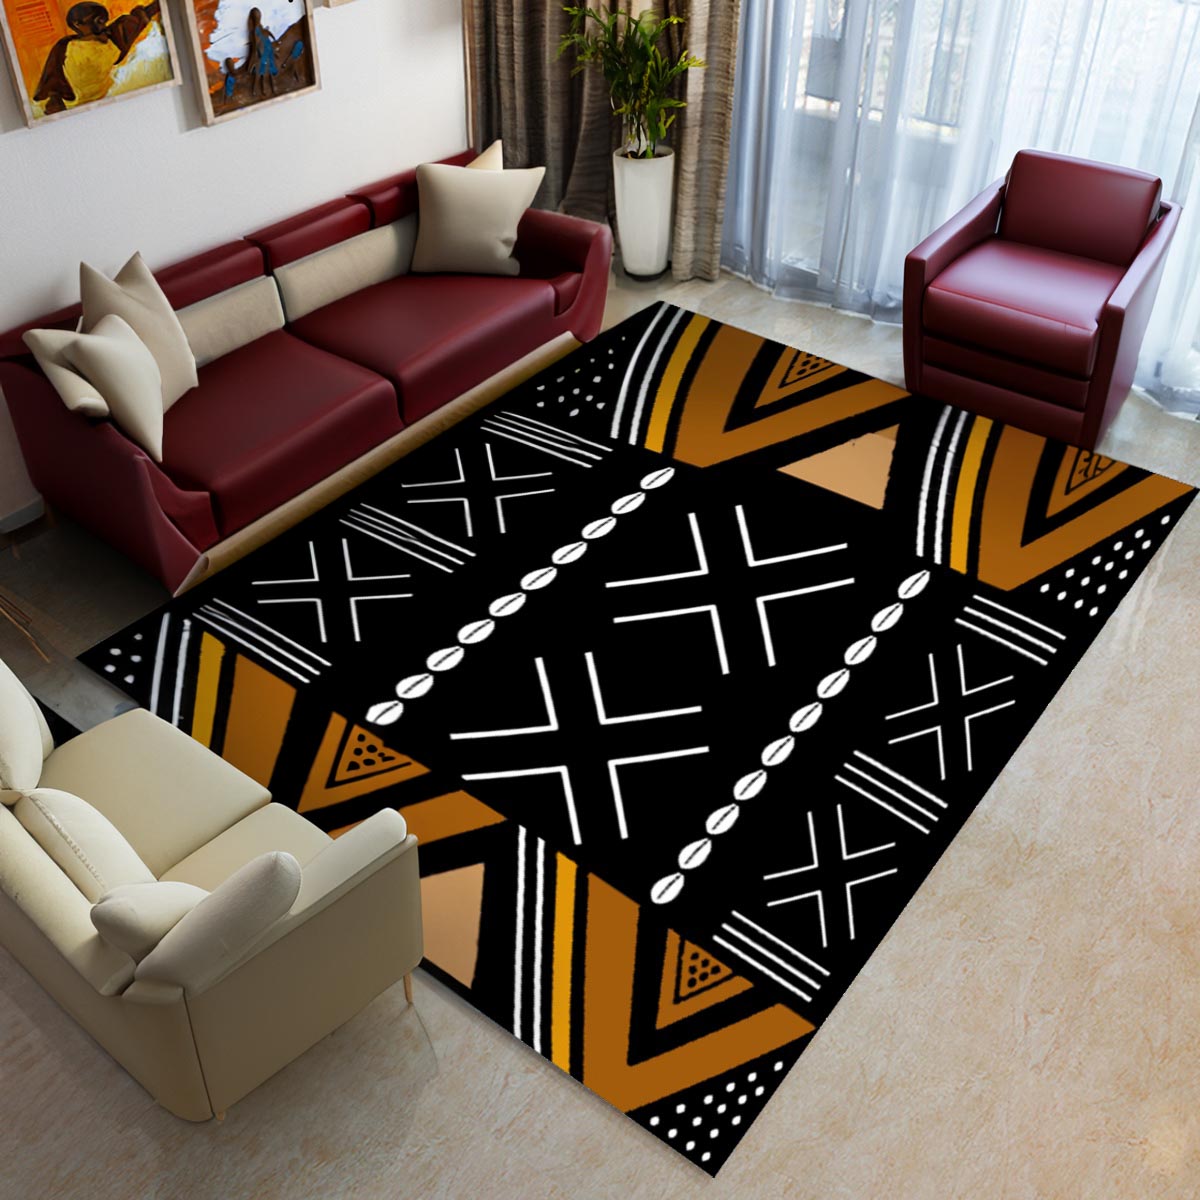 Afrocentric Rug - Vibrant Tribal Print Carpet Design